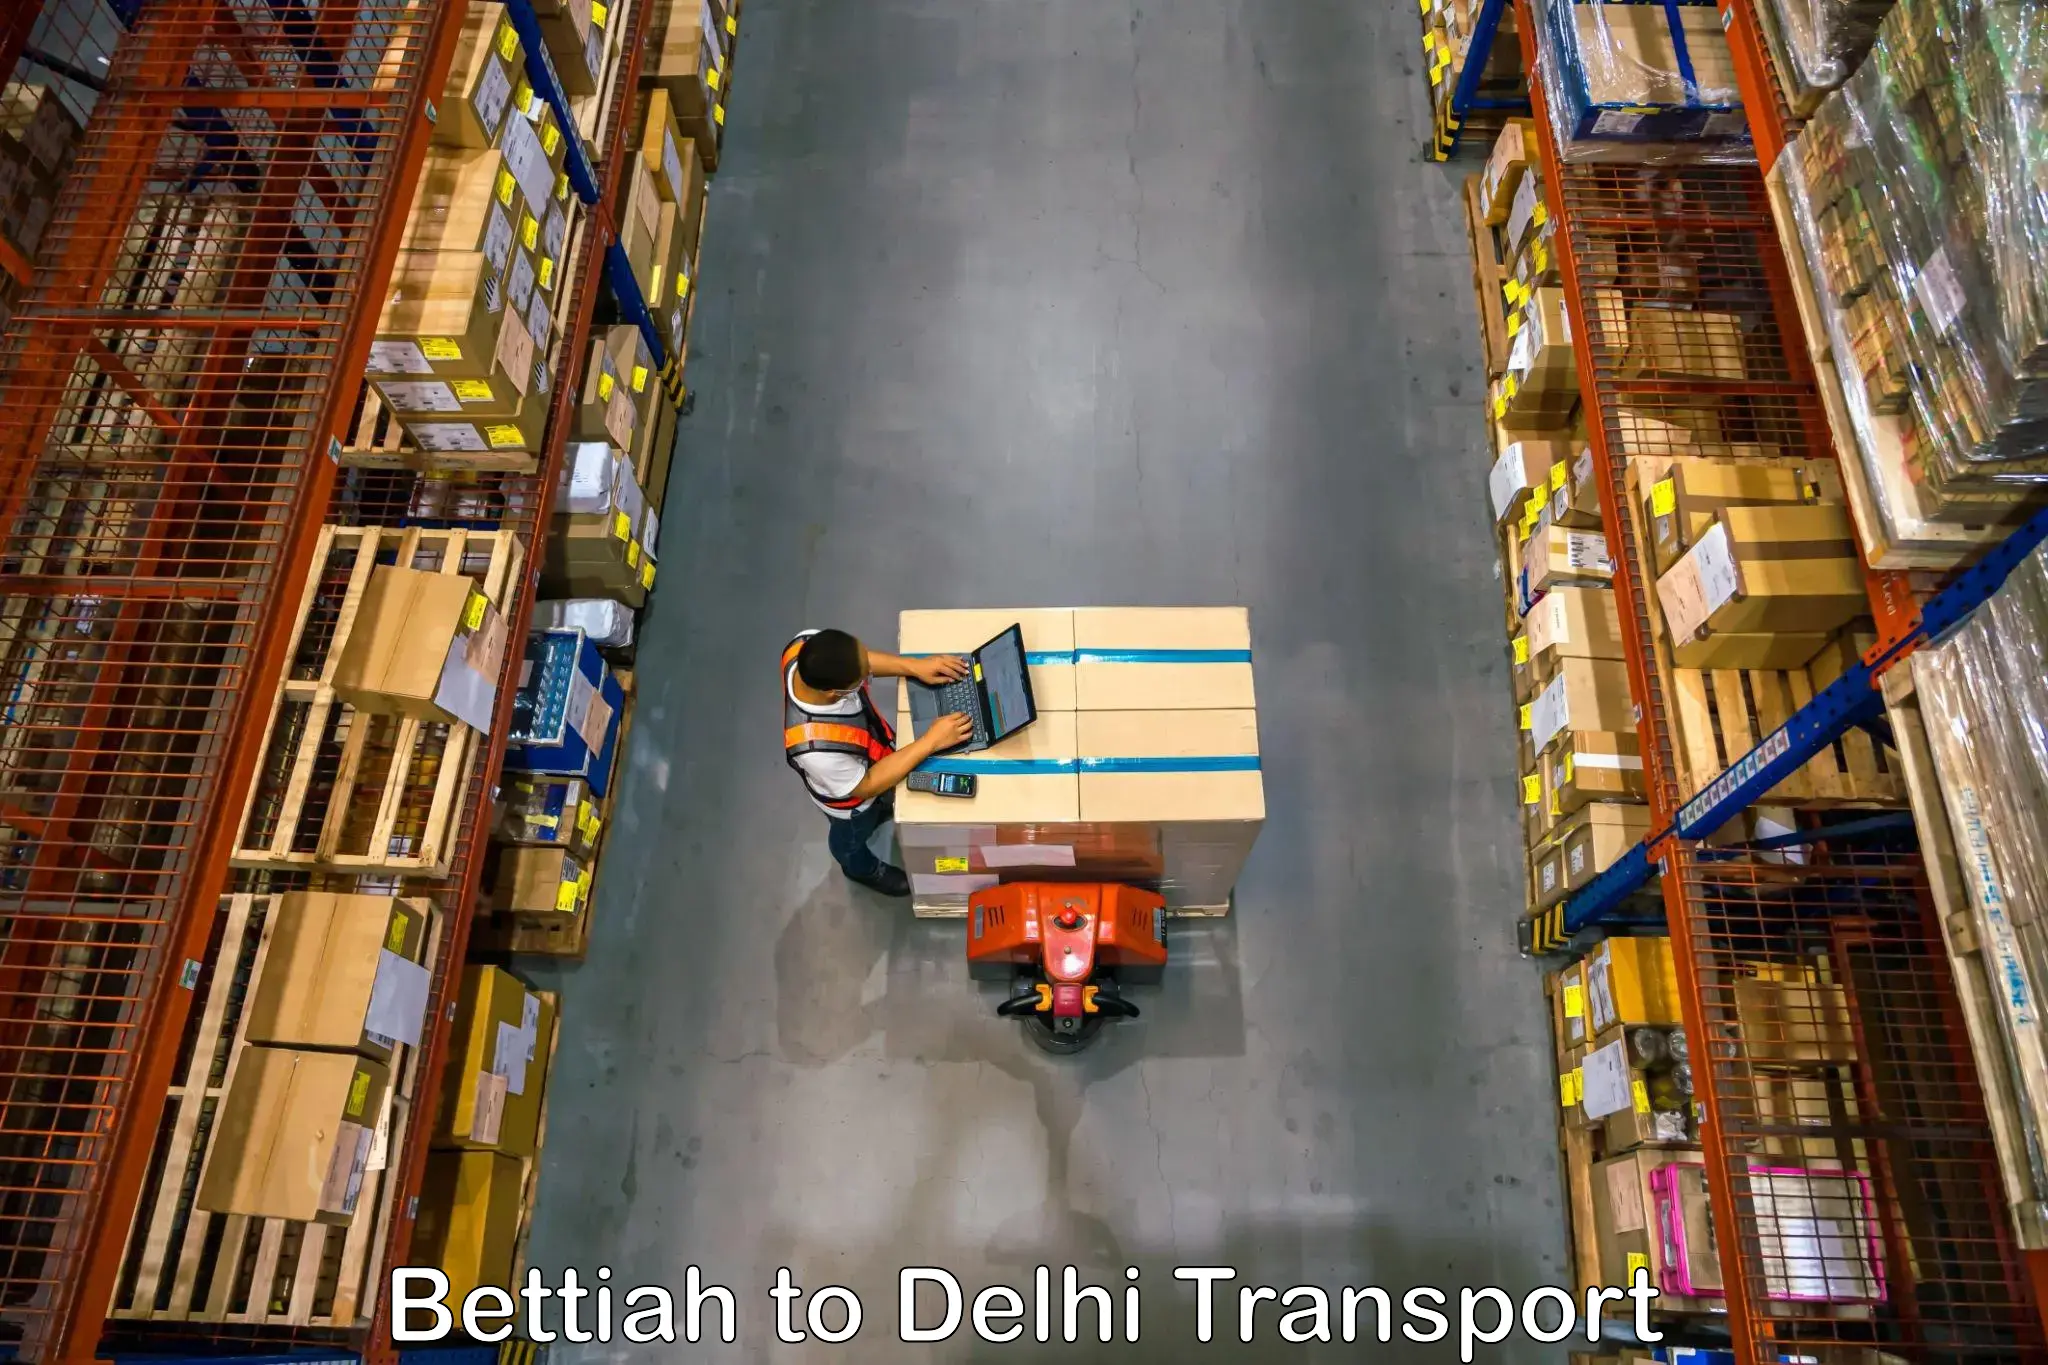 Sending bike to another city Bettiah to University of Delhi